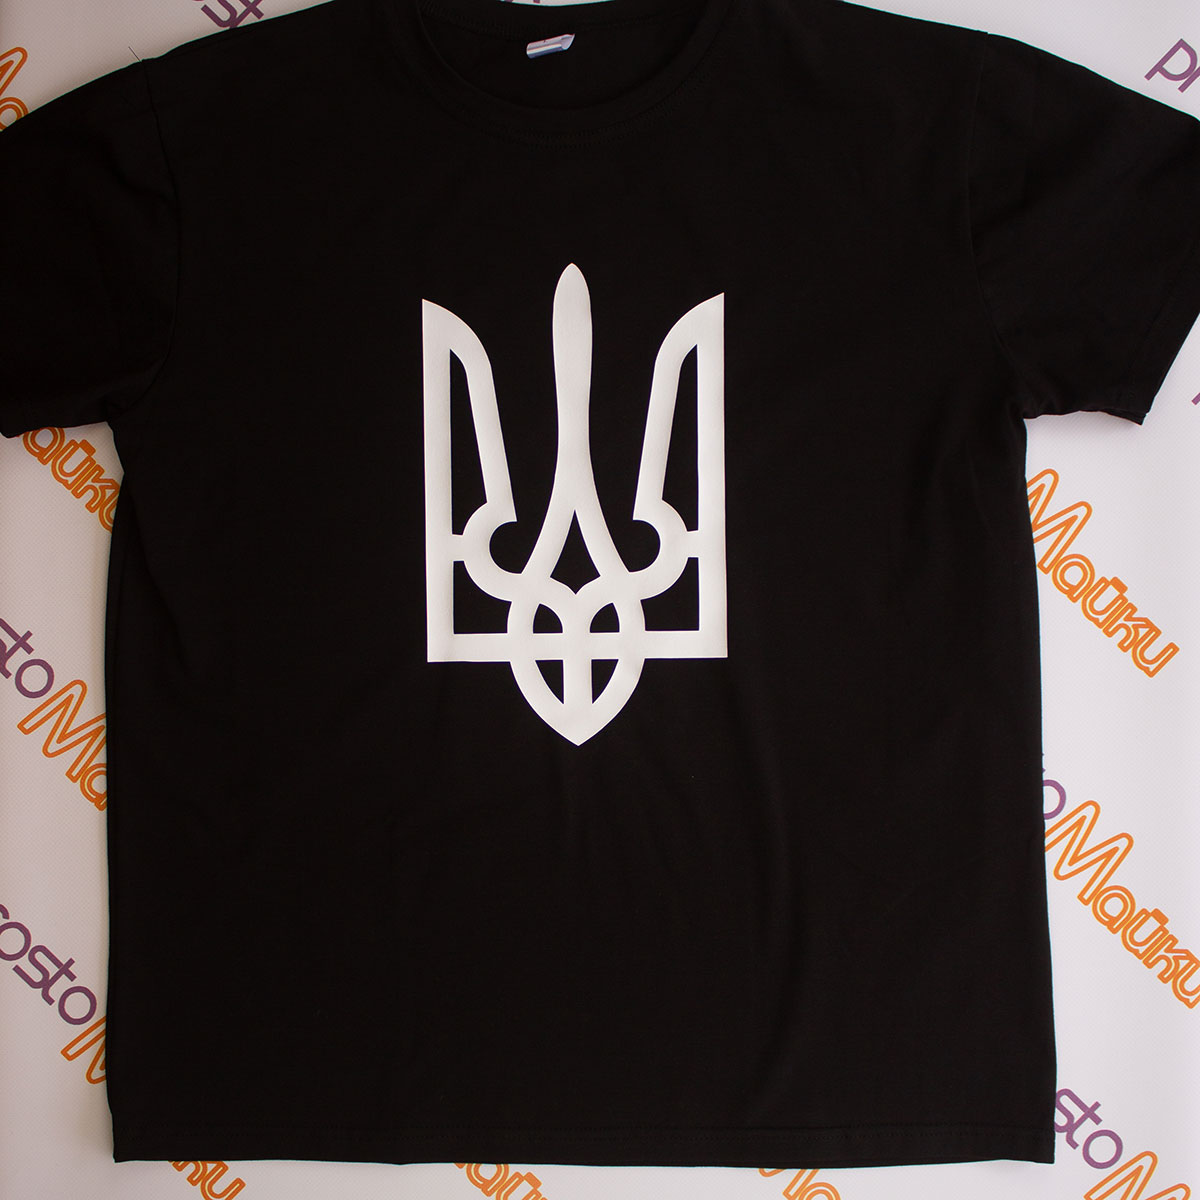 Дитяча футболка з гербом України